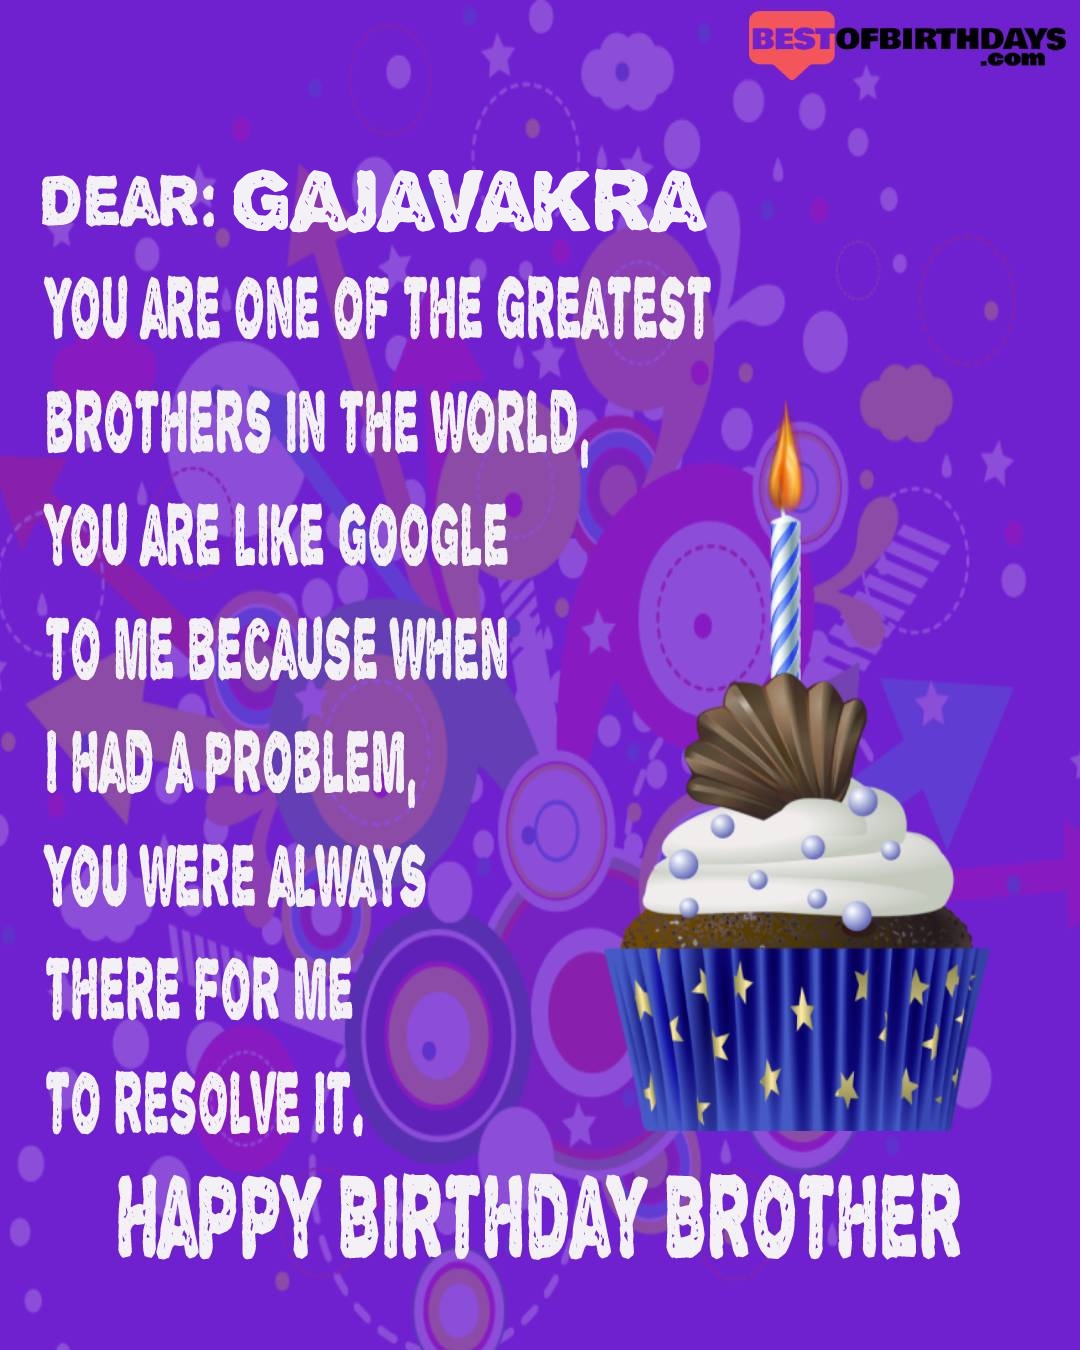 Happy birthday gajavakra bhai brother bro